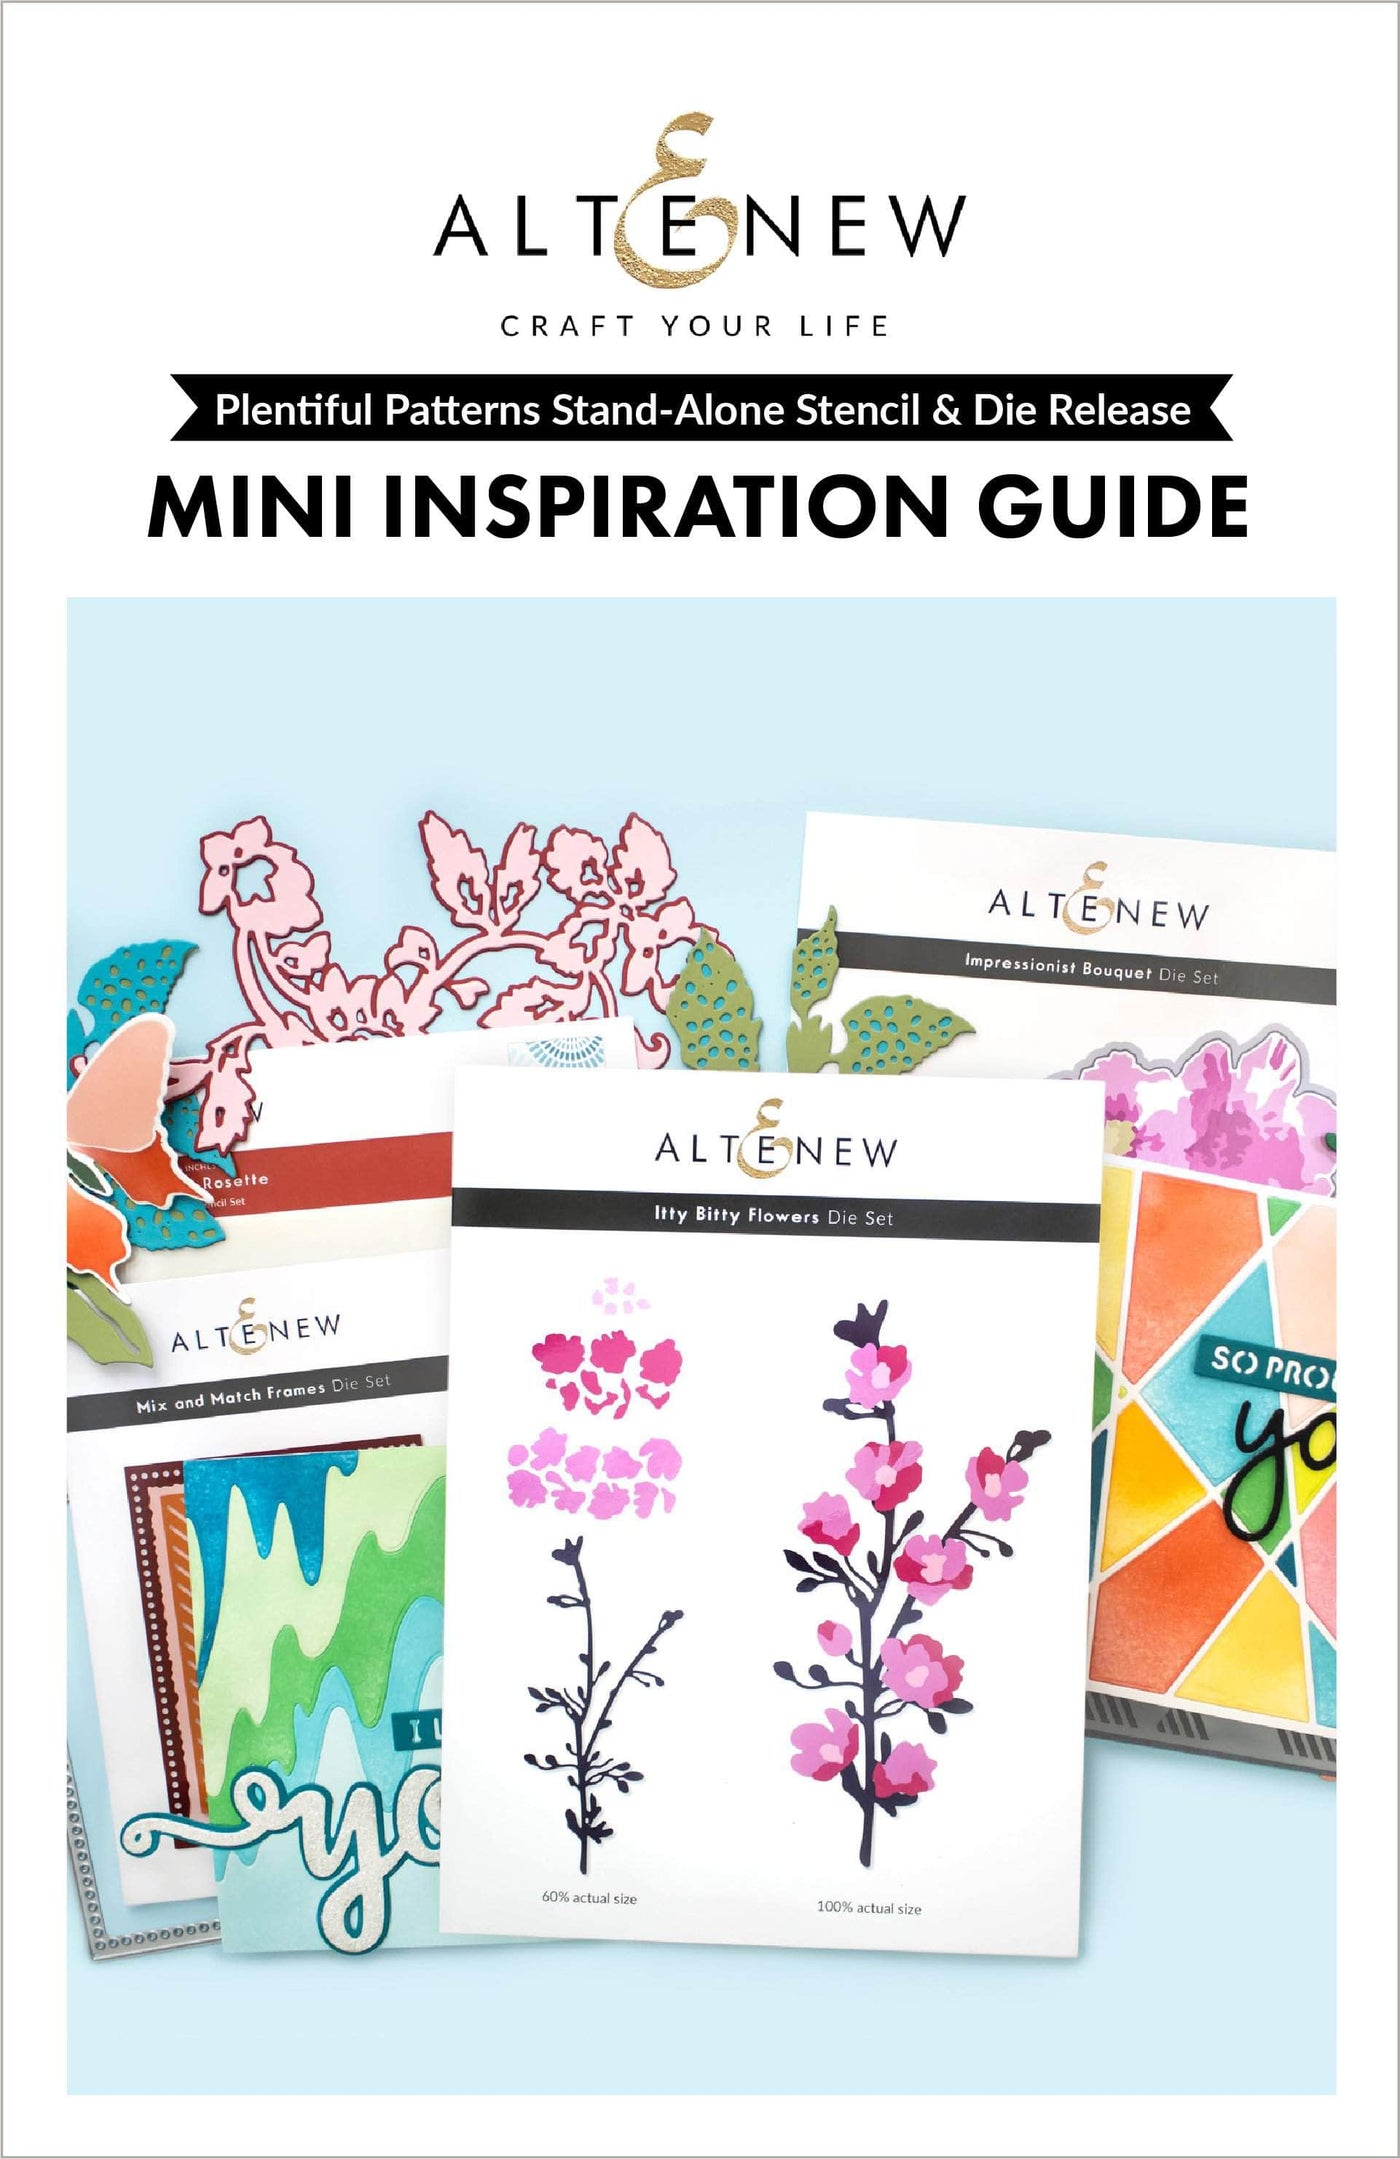 Printed Media Plentiful Patterns Stand-alone Stencil & Die Release Mini Inspiration Guide